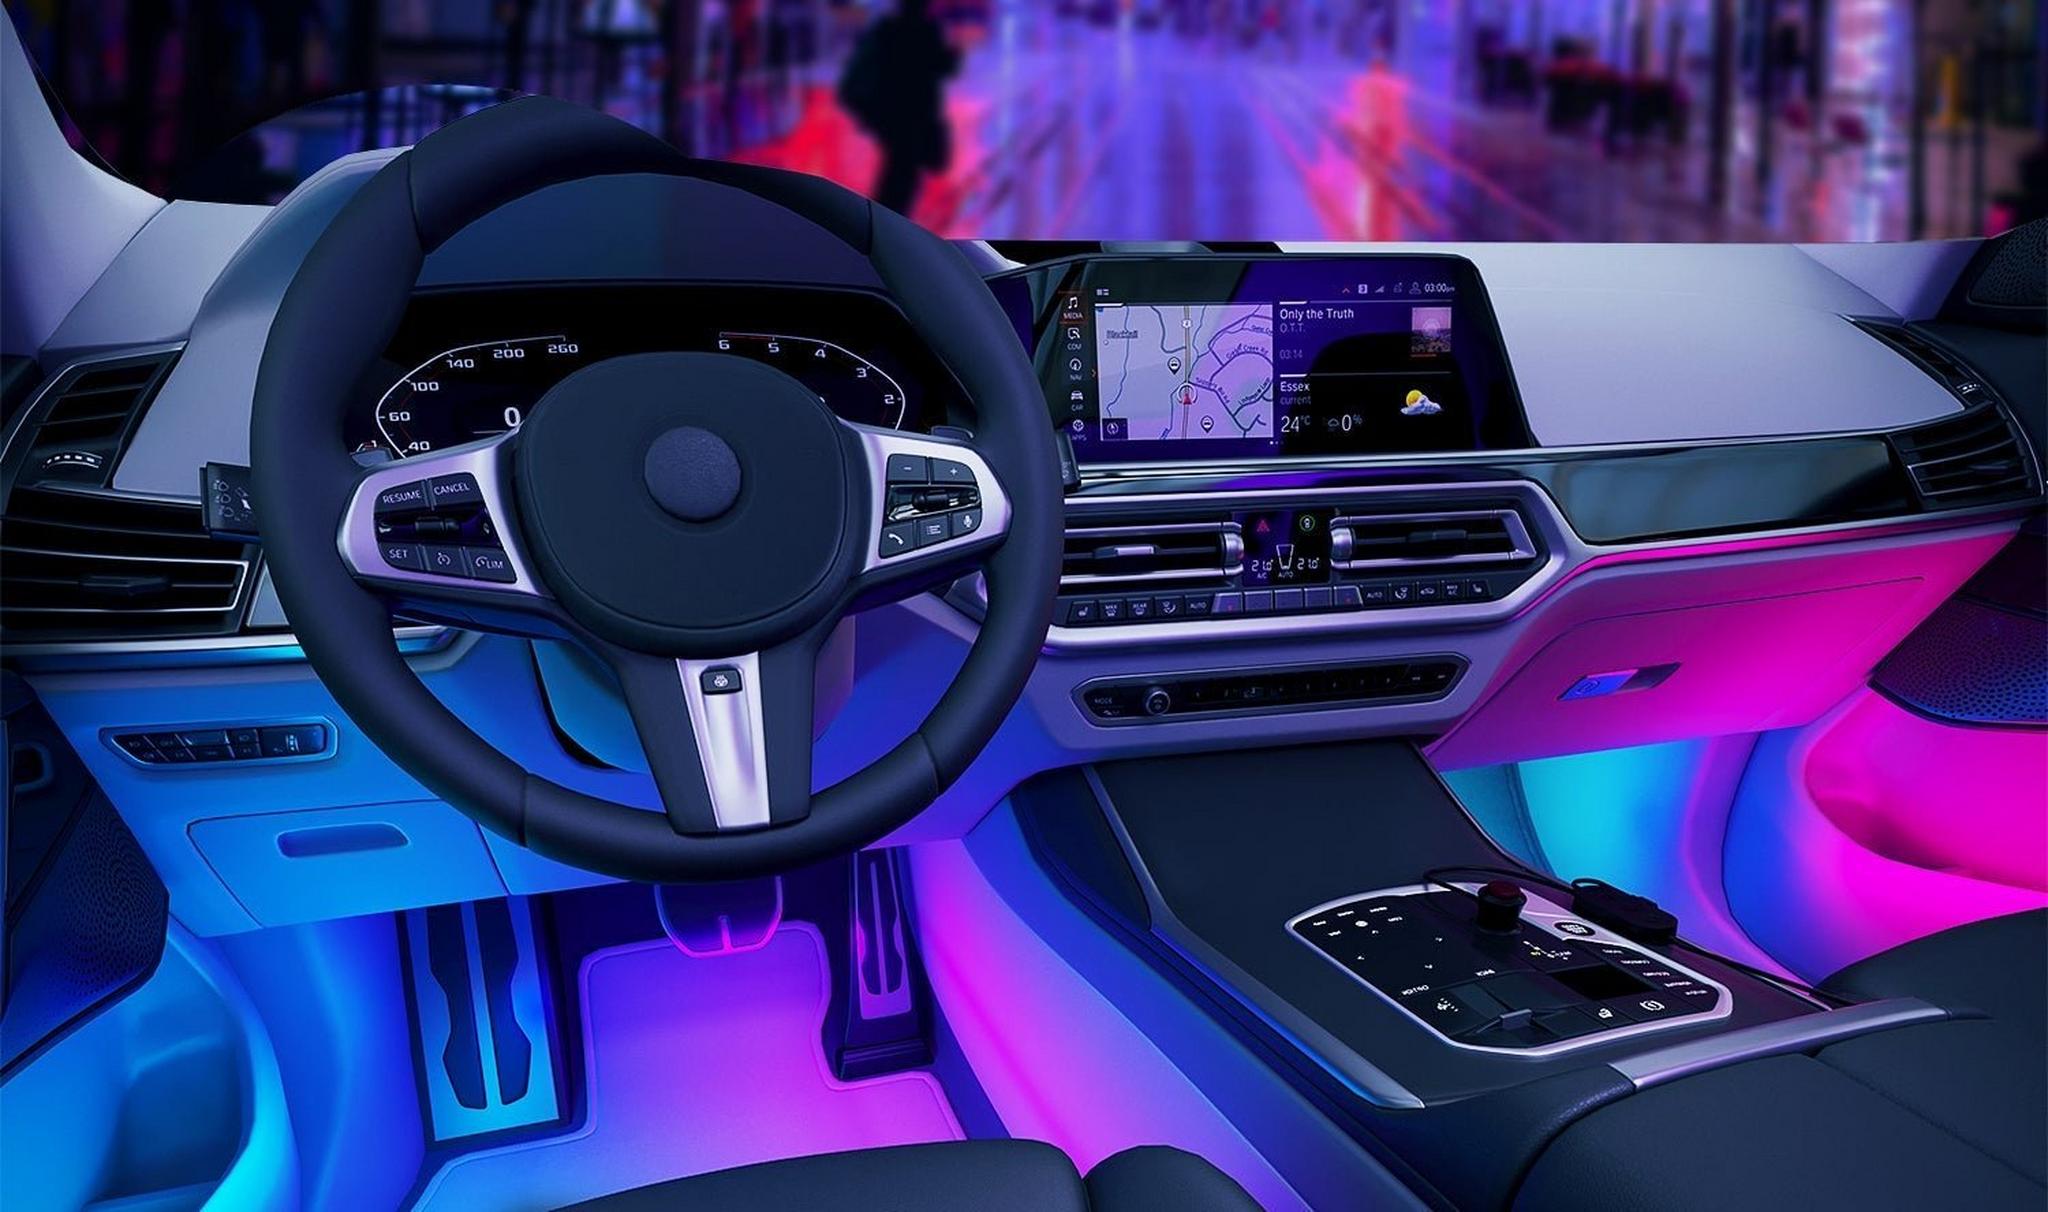 Govee RGBIC Smart Interior Car Lights